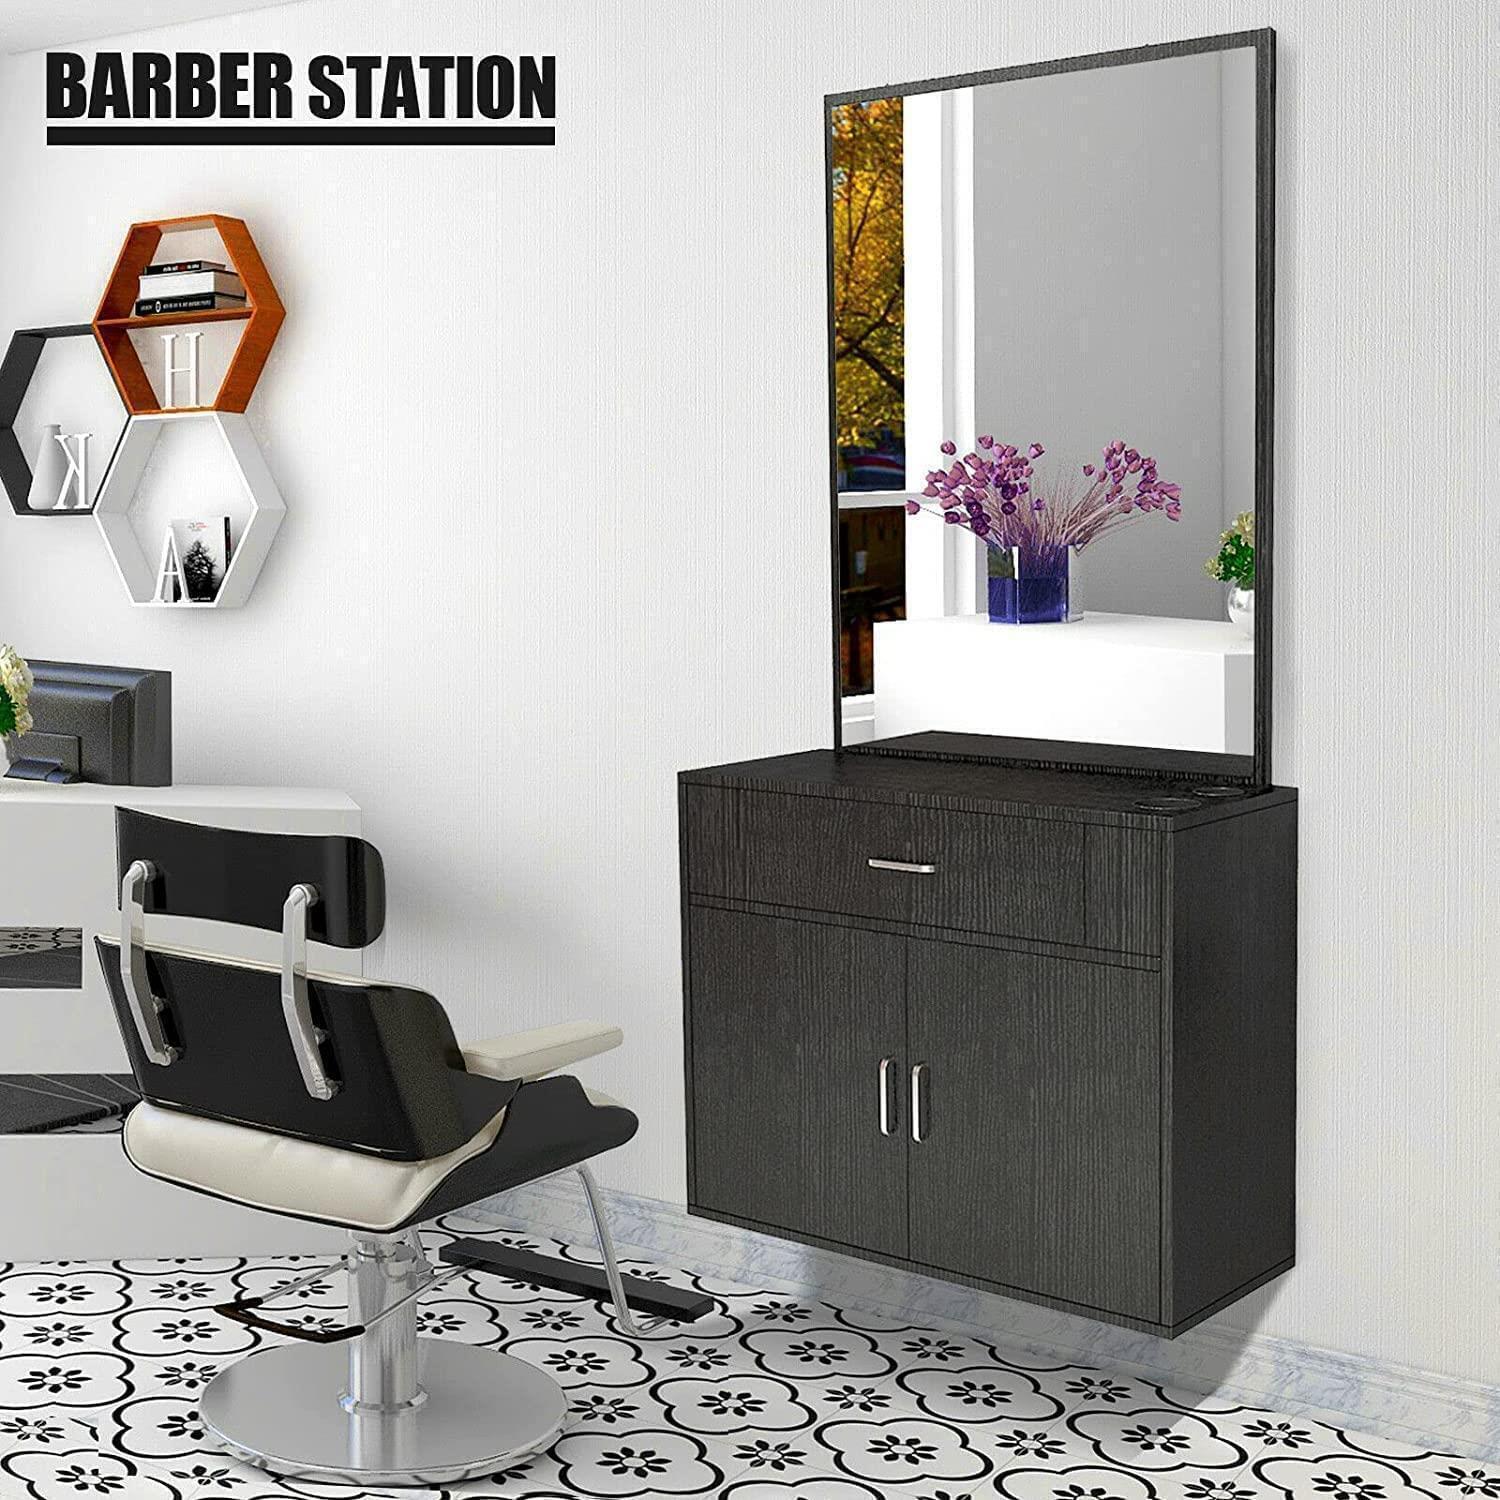 thinkstar Wall Mount Salon Station Barber Stations Hair Styling Station Equipment + Mirror